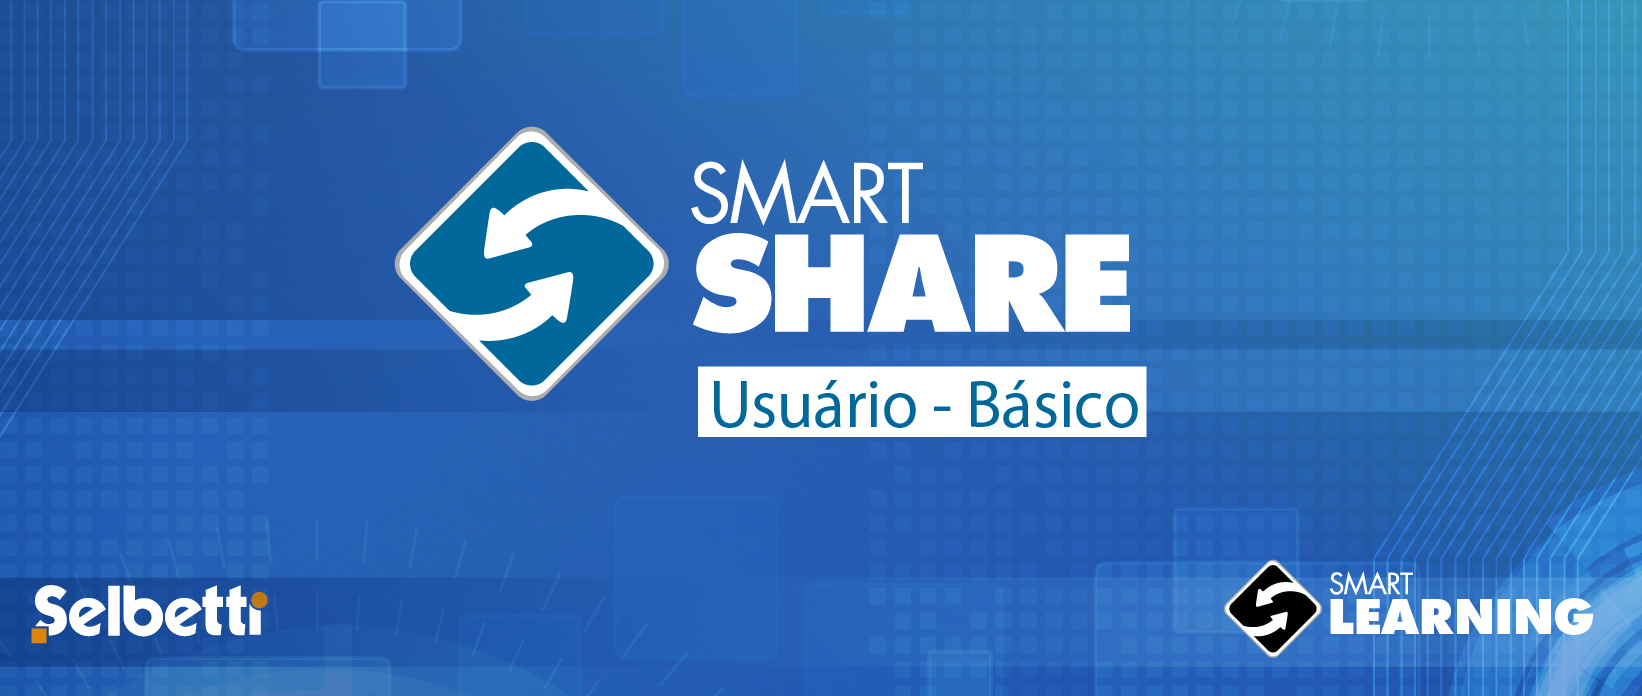 Banner - SmartShare - Básico (Usuário)